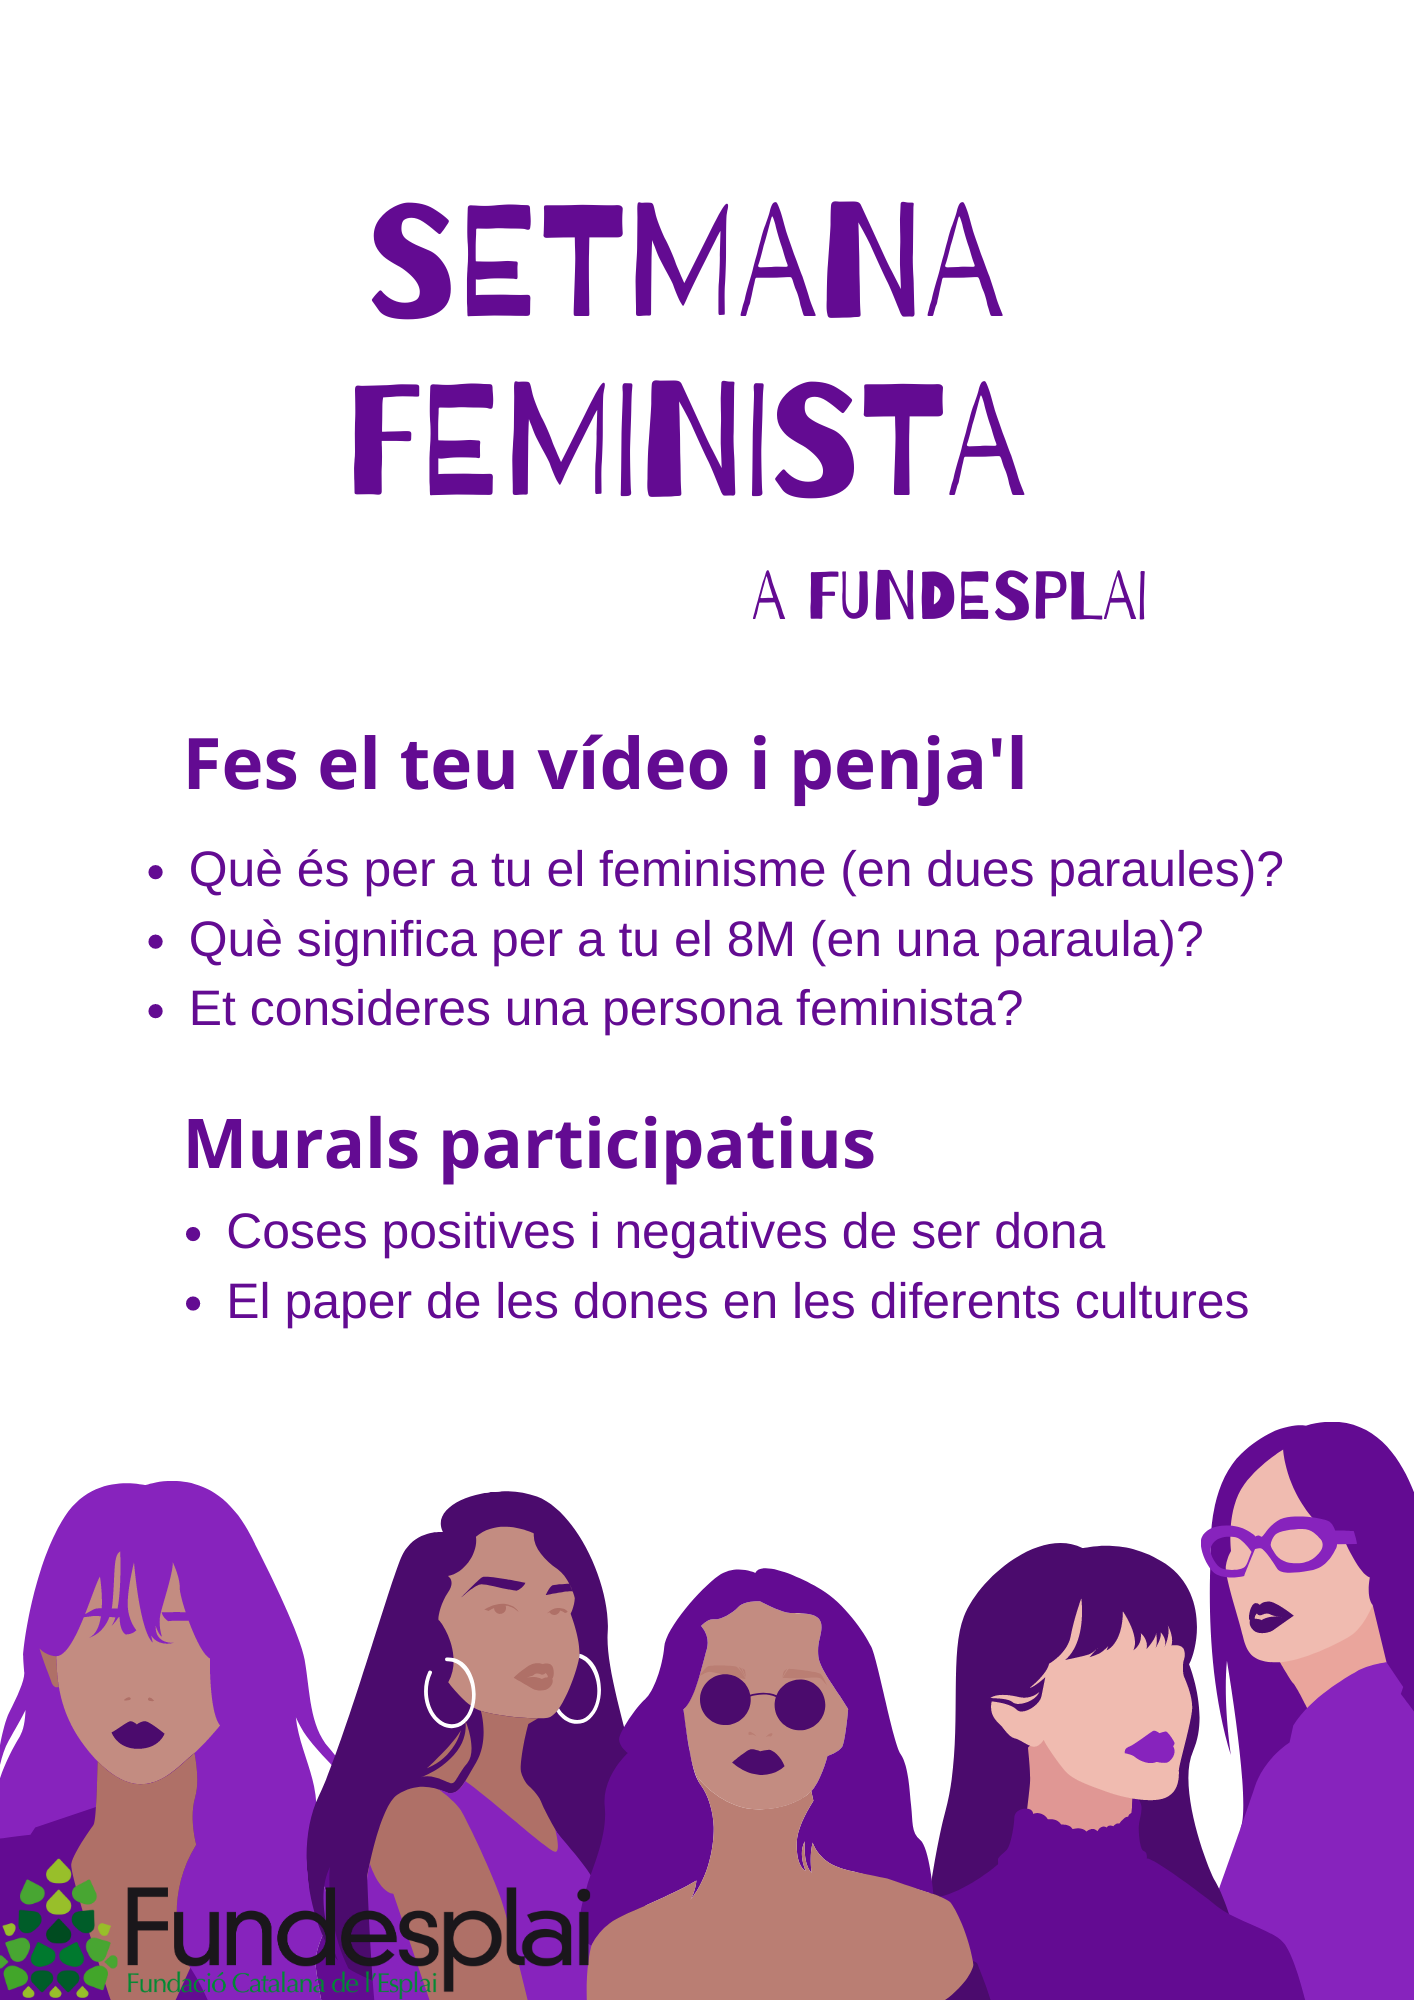 Setmana feminista fundesplai